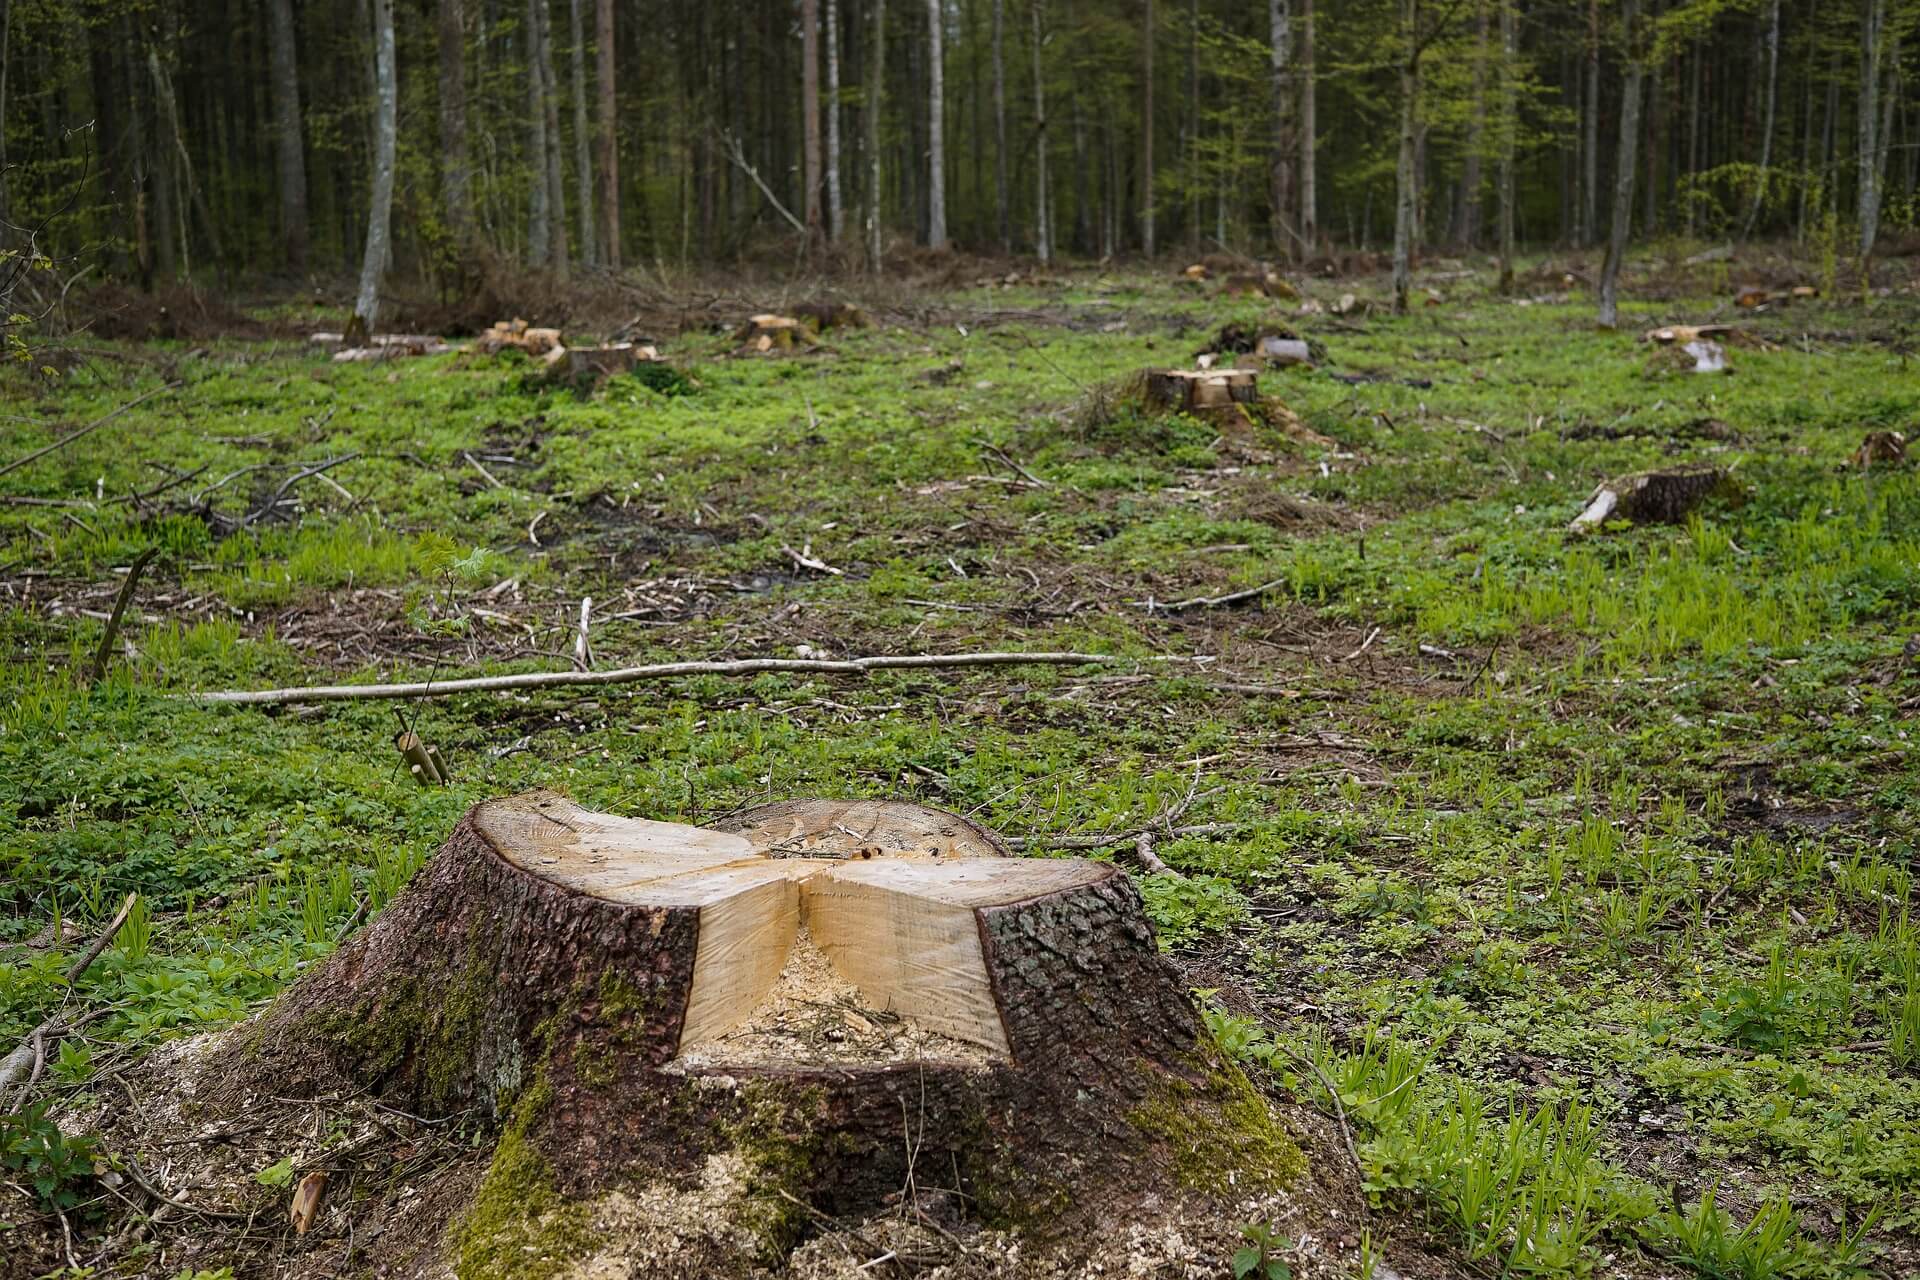 Just a stump.